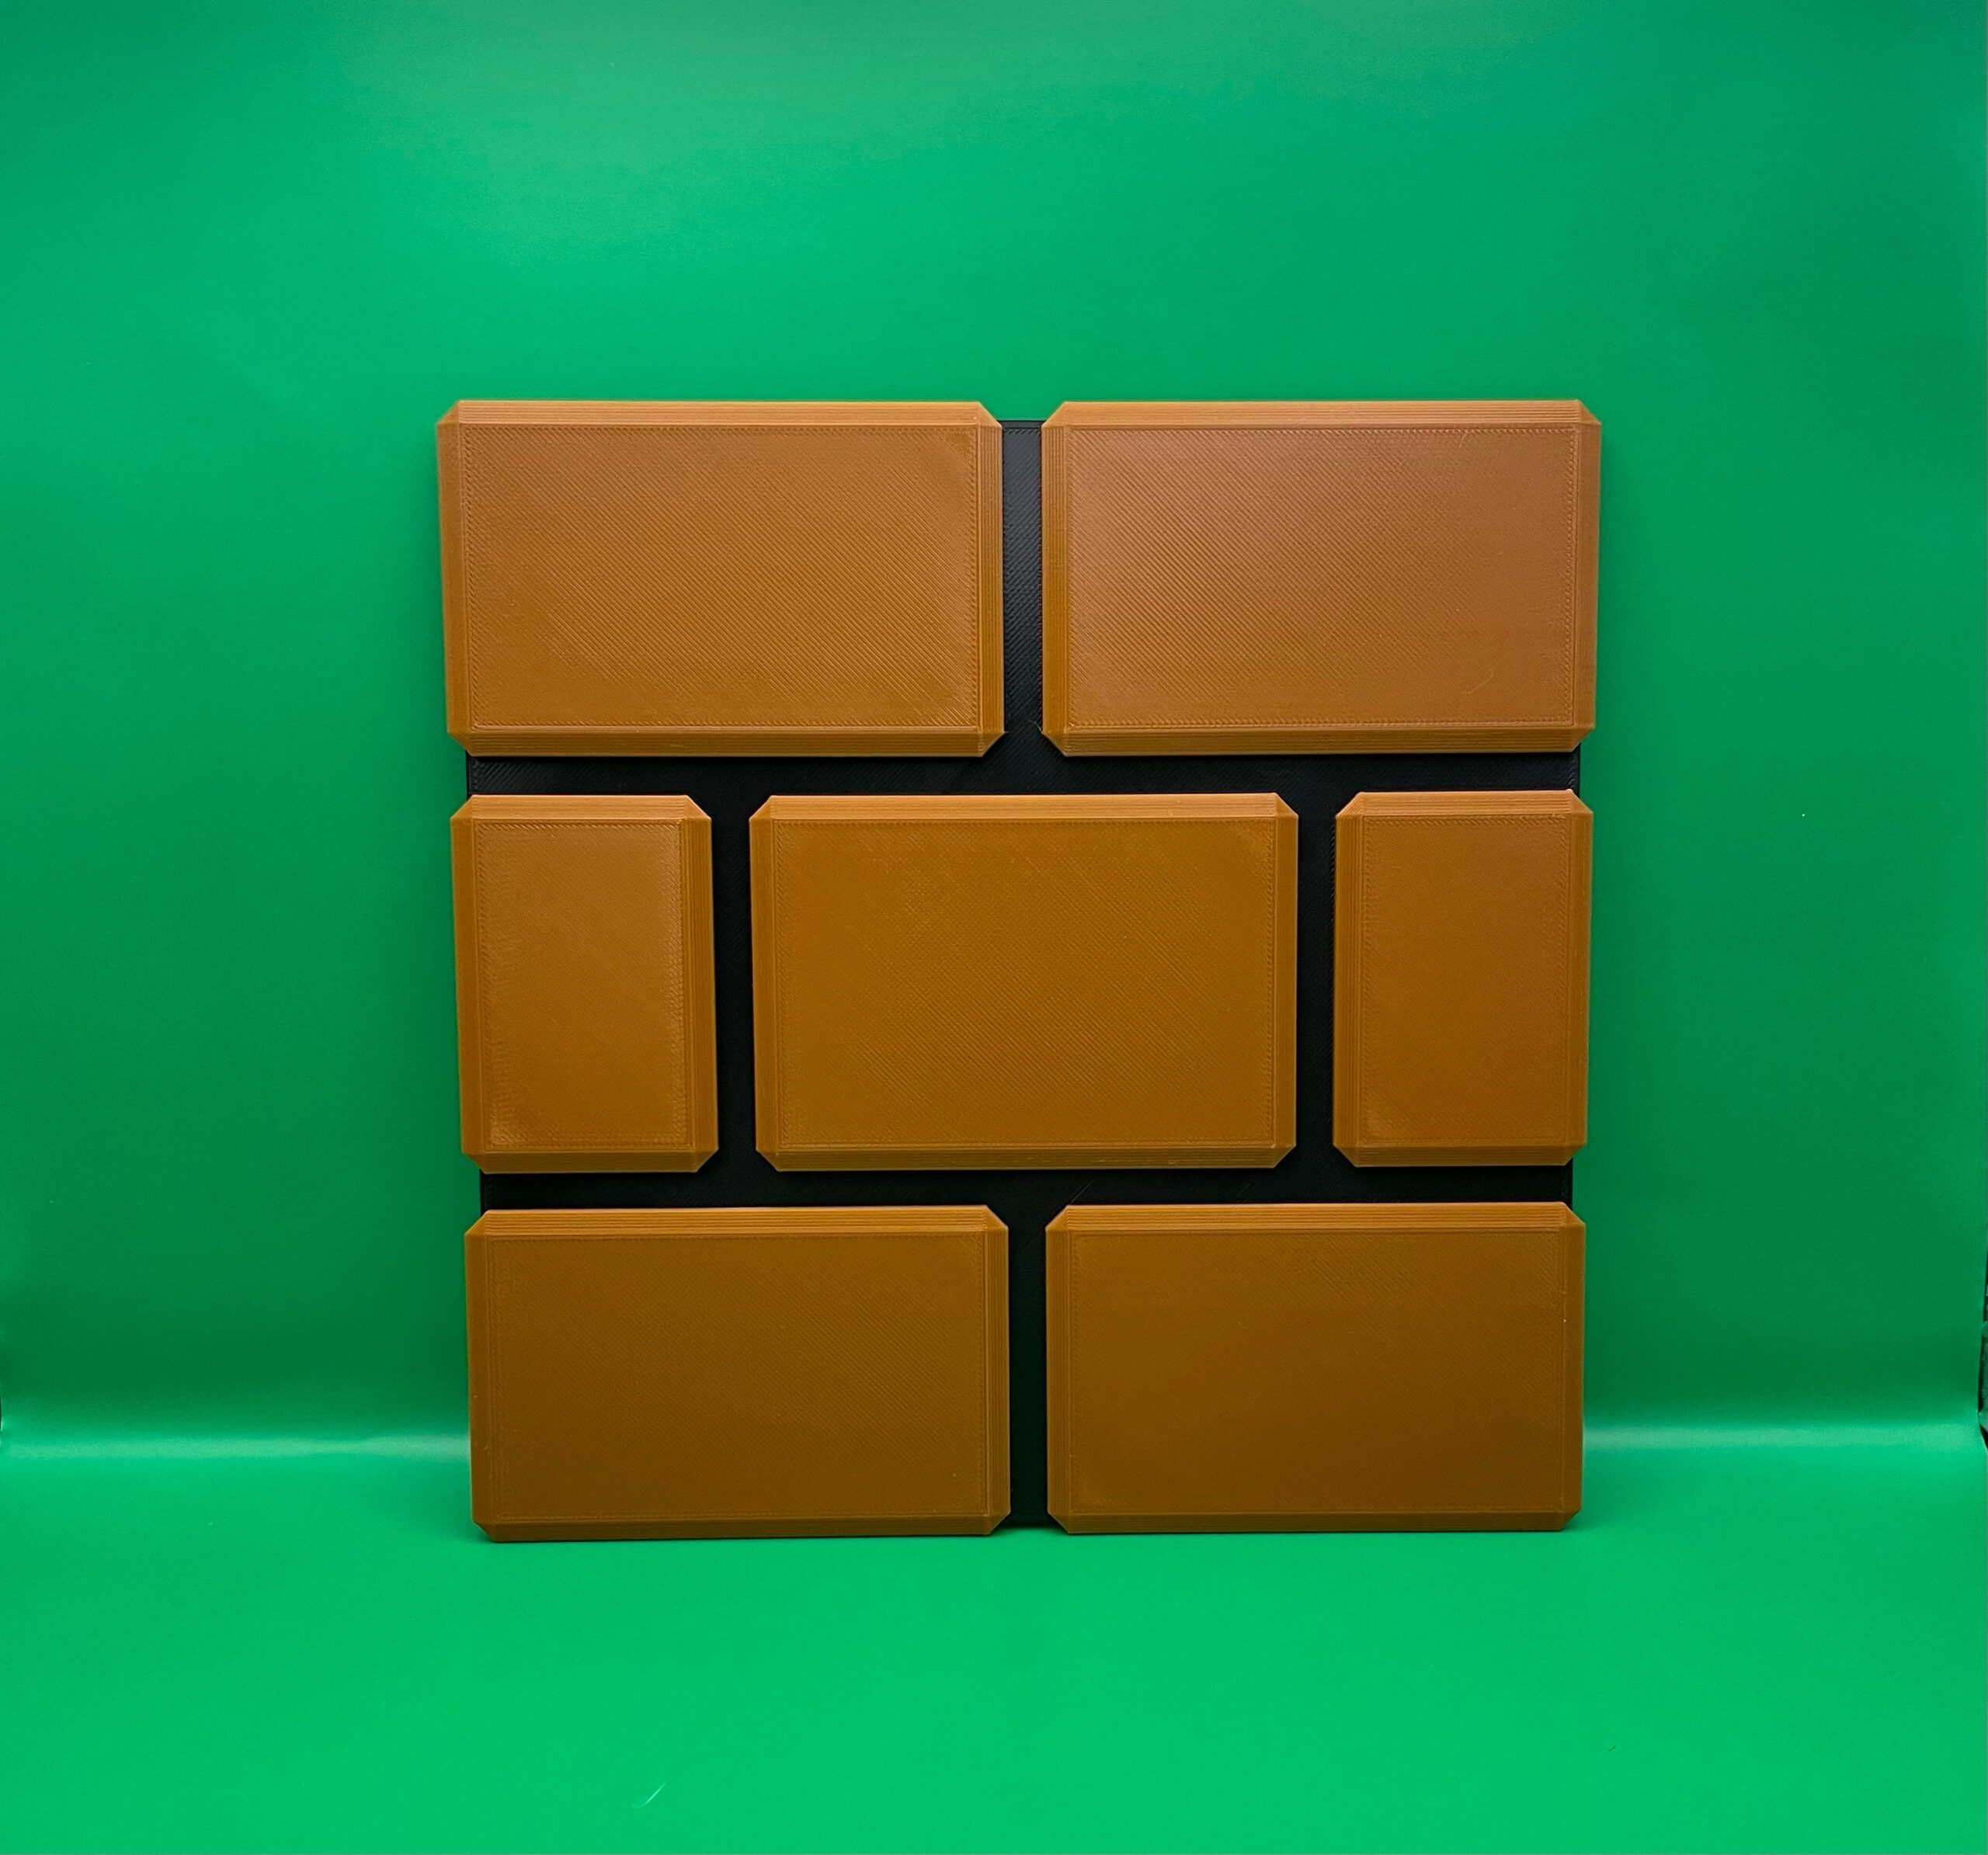 HUGE 3D Printed Brick Block From Mario For Wall Or Shelf Art Etsy - Free Printable Brick Paper Cloture